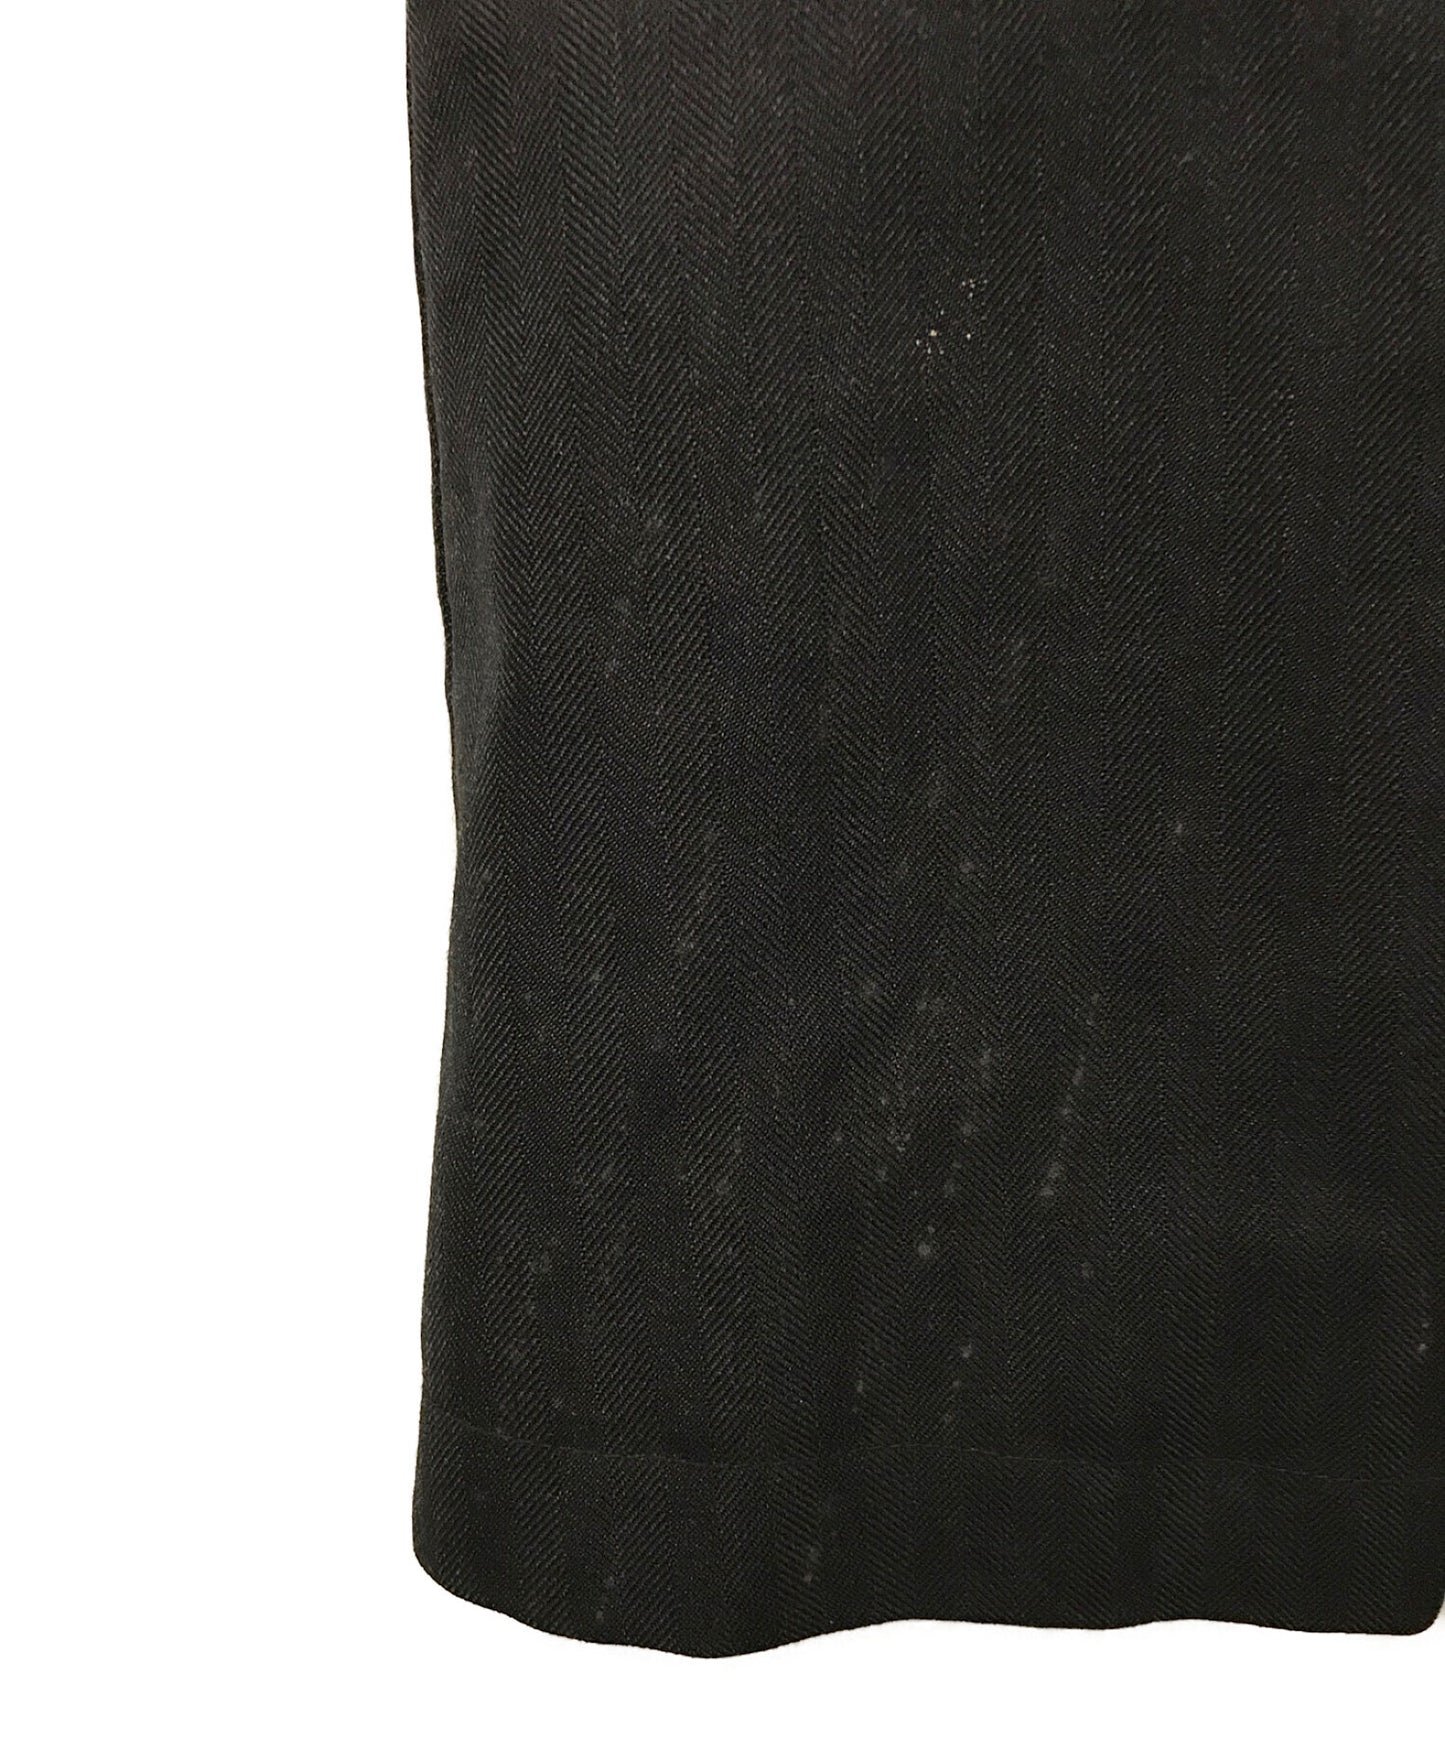 Burberry's Vintage] [Single Sleeve] Tie Locken Coat BBC03-982-08